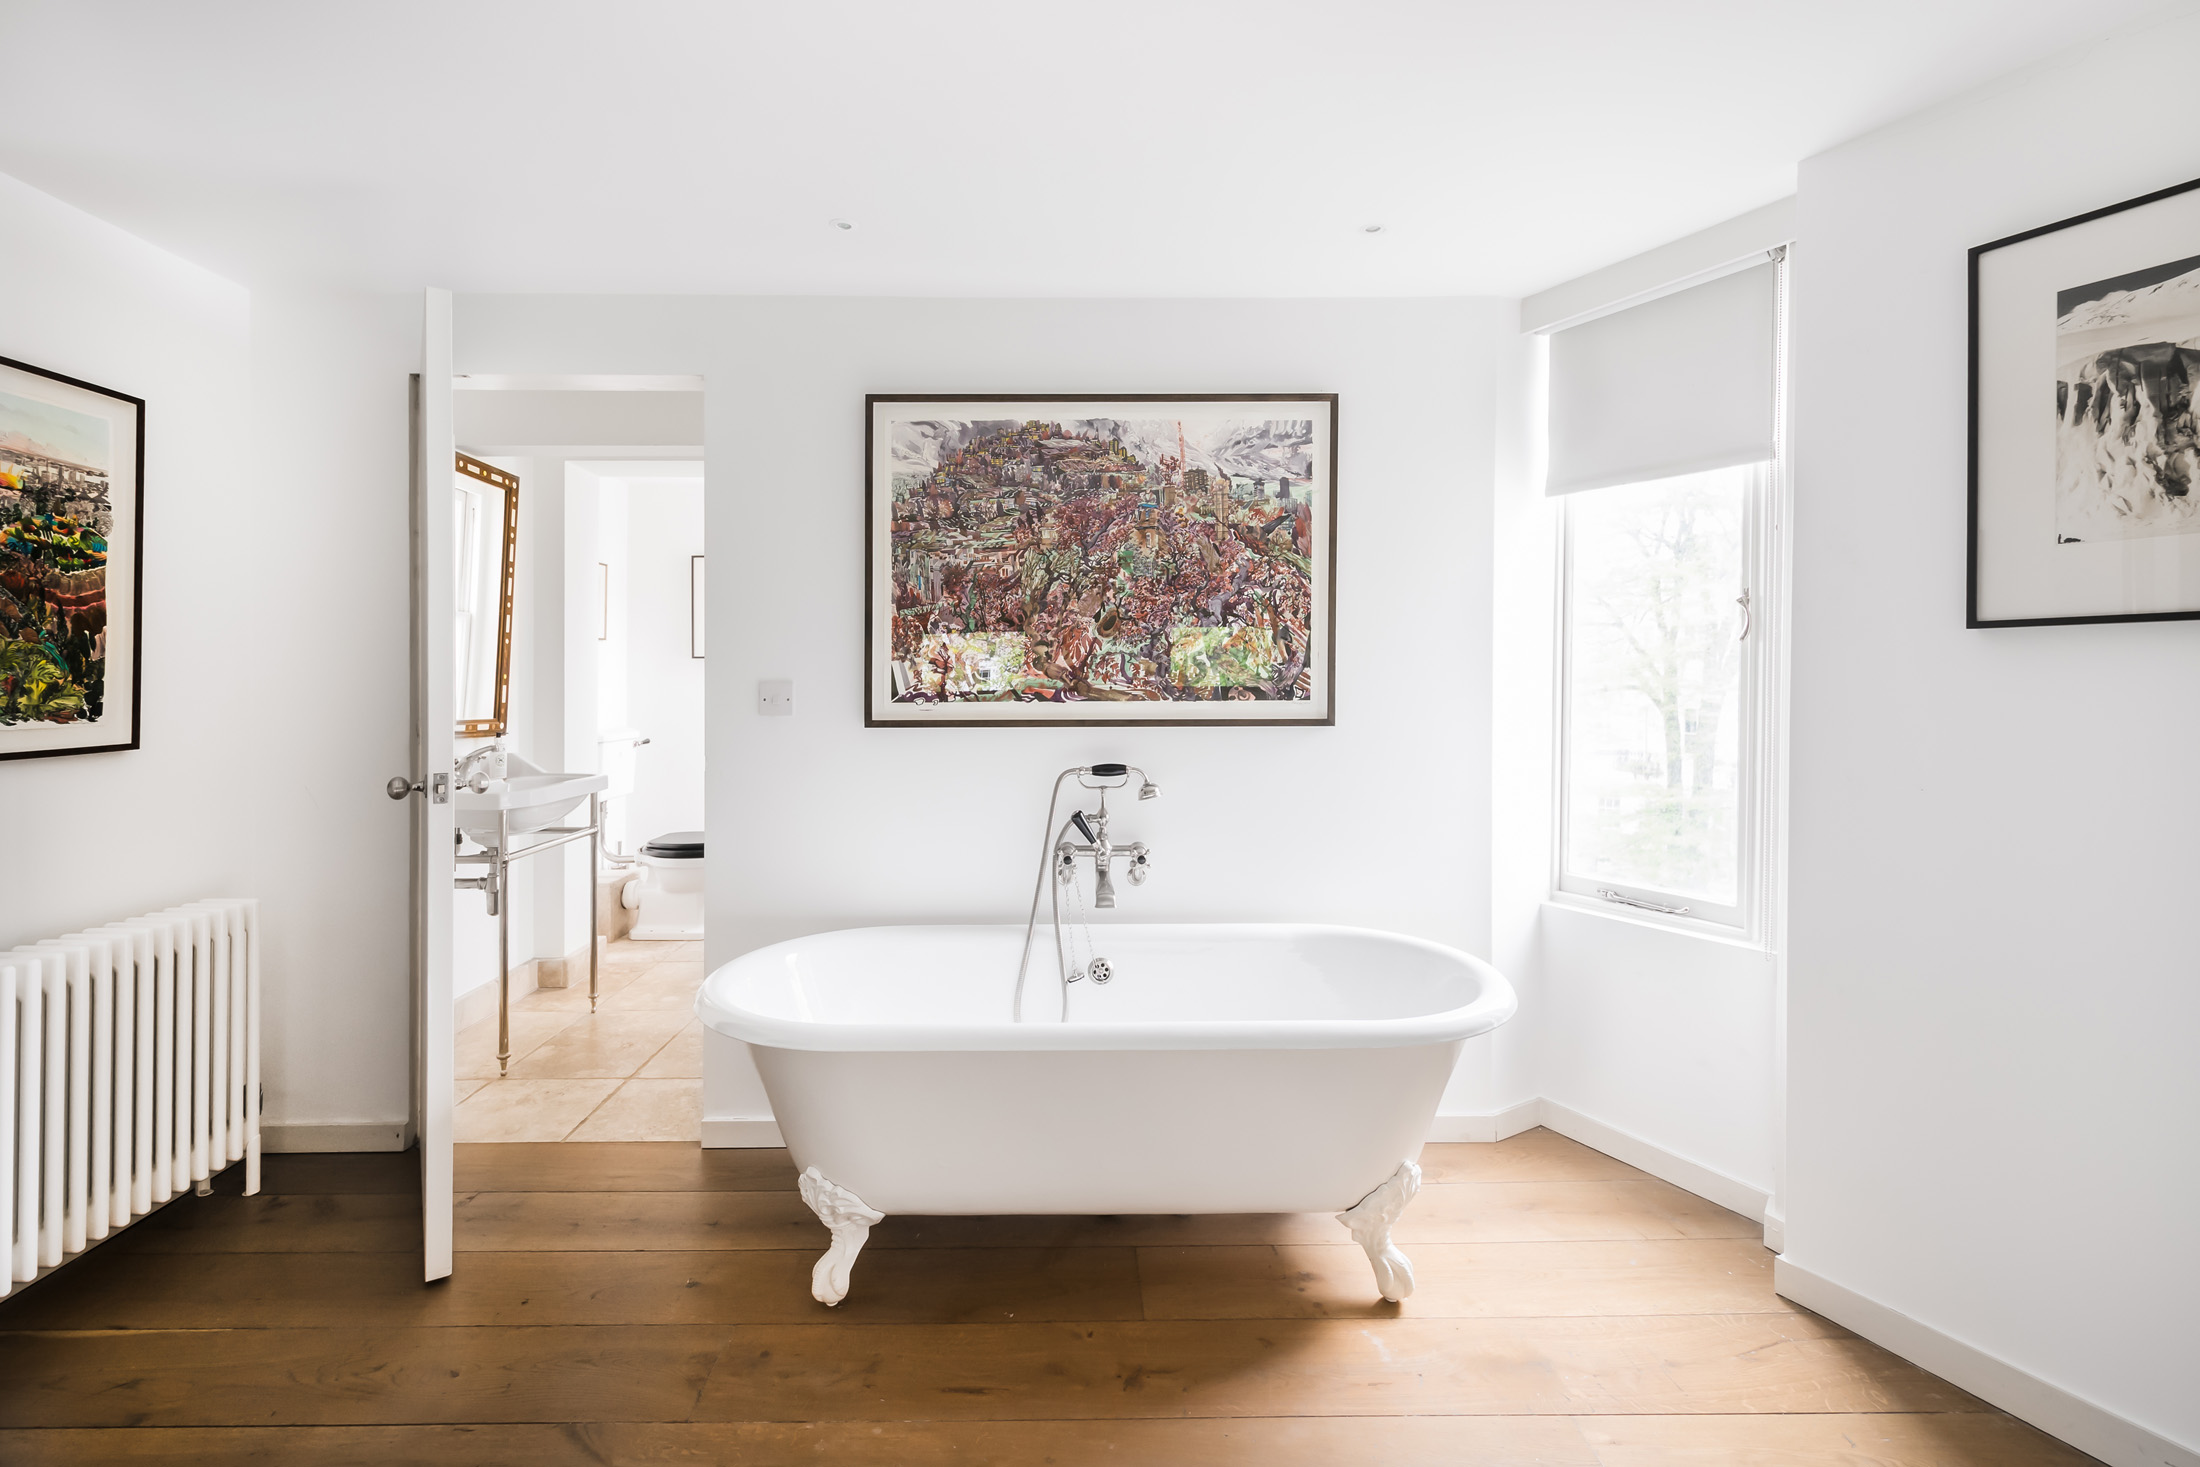 For Rent: Ladbroke Gardens Notting Hill W11 free-standing bath in minimalist bedroom